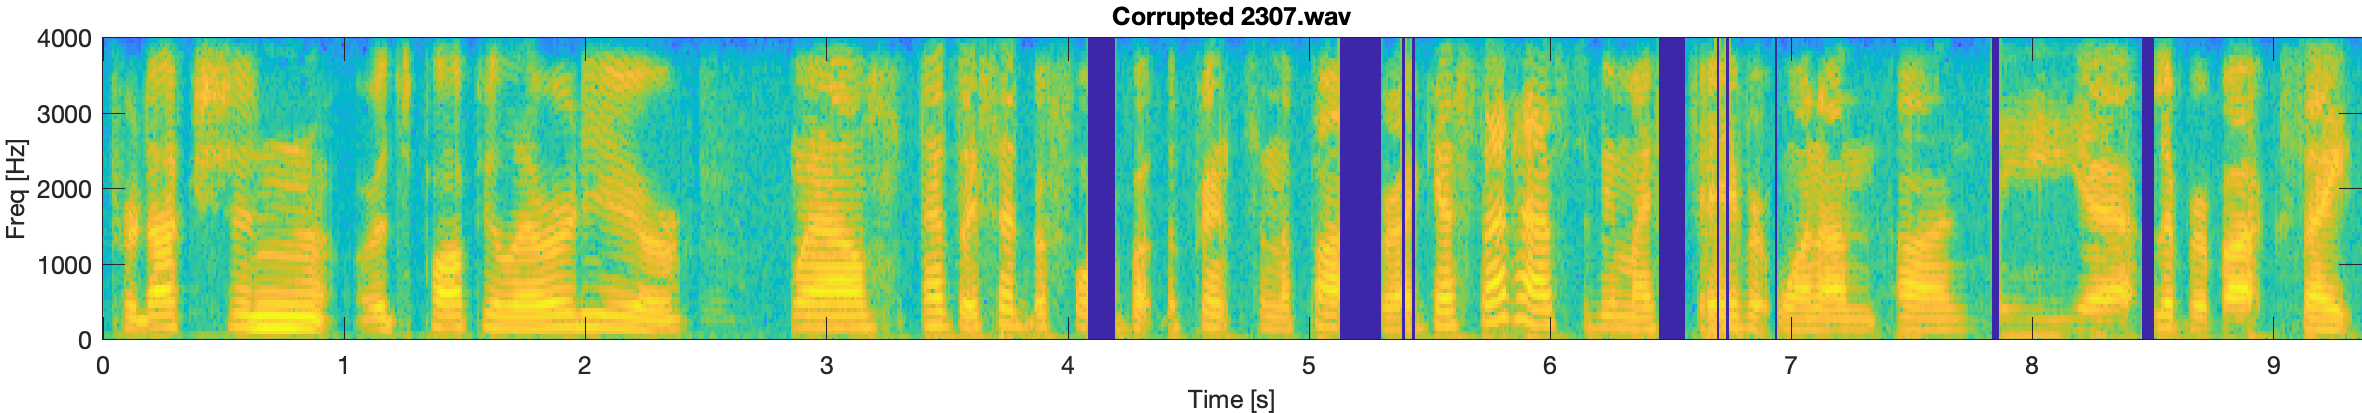 Corrupted spectrogram 2307.wav